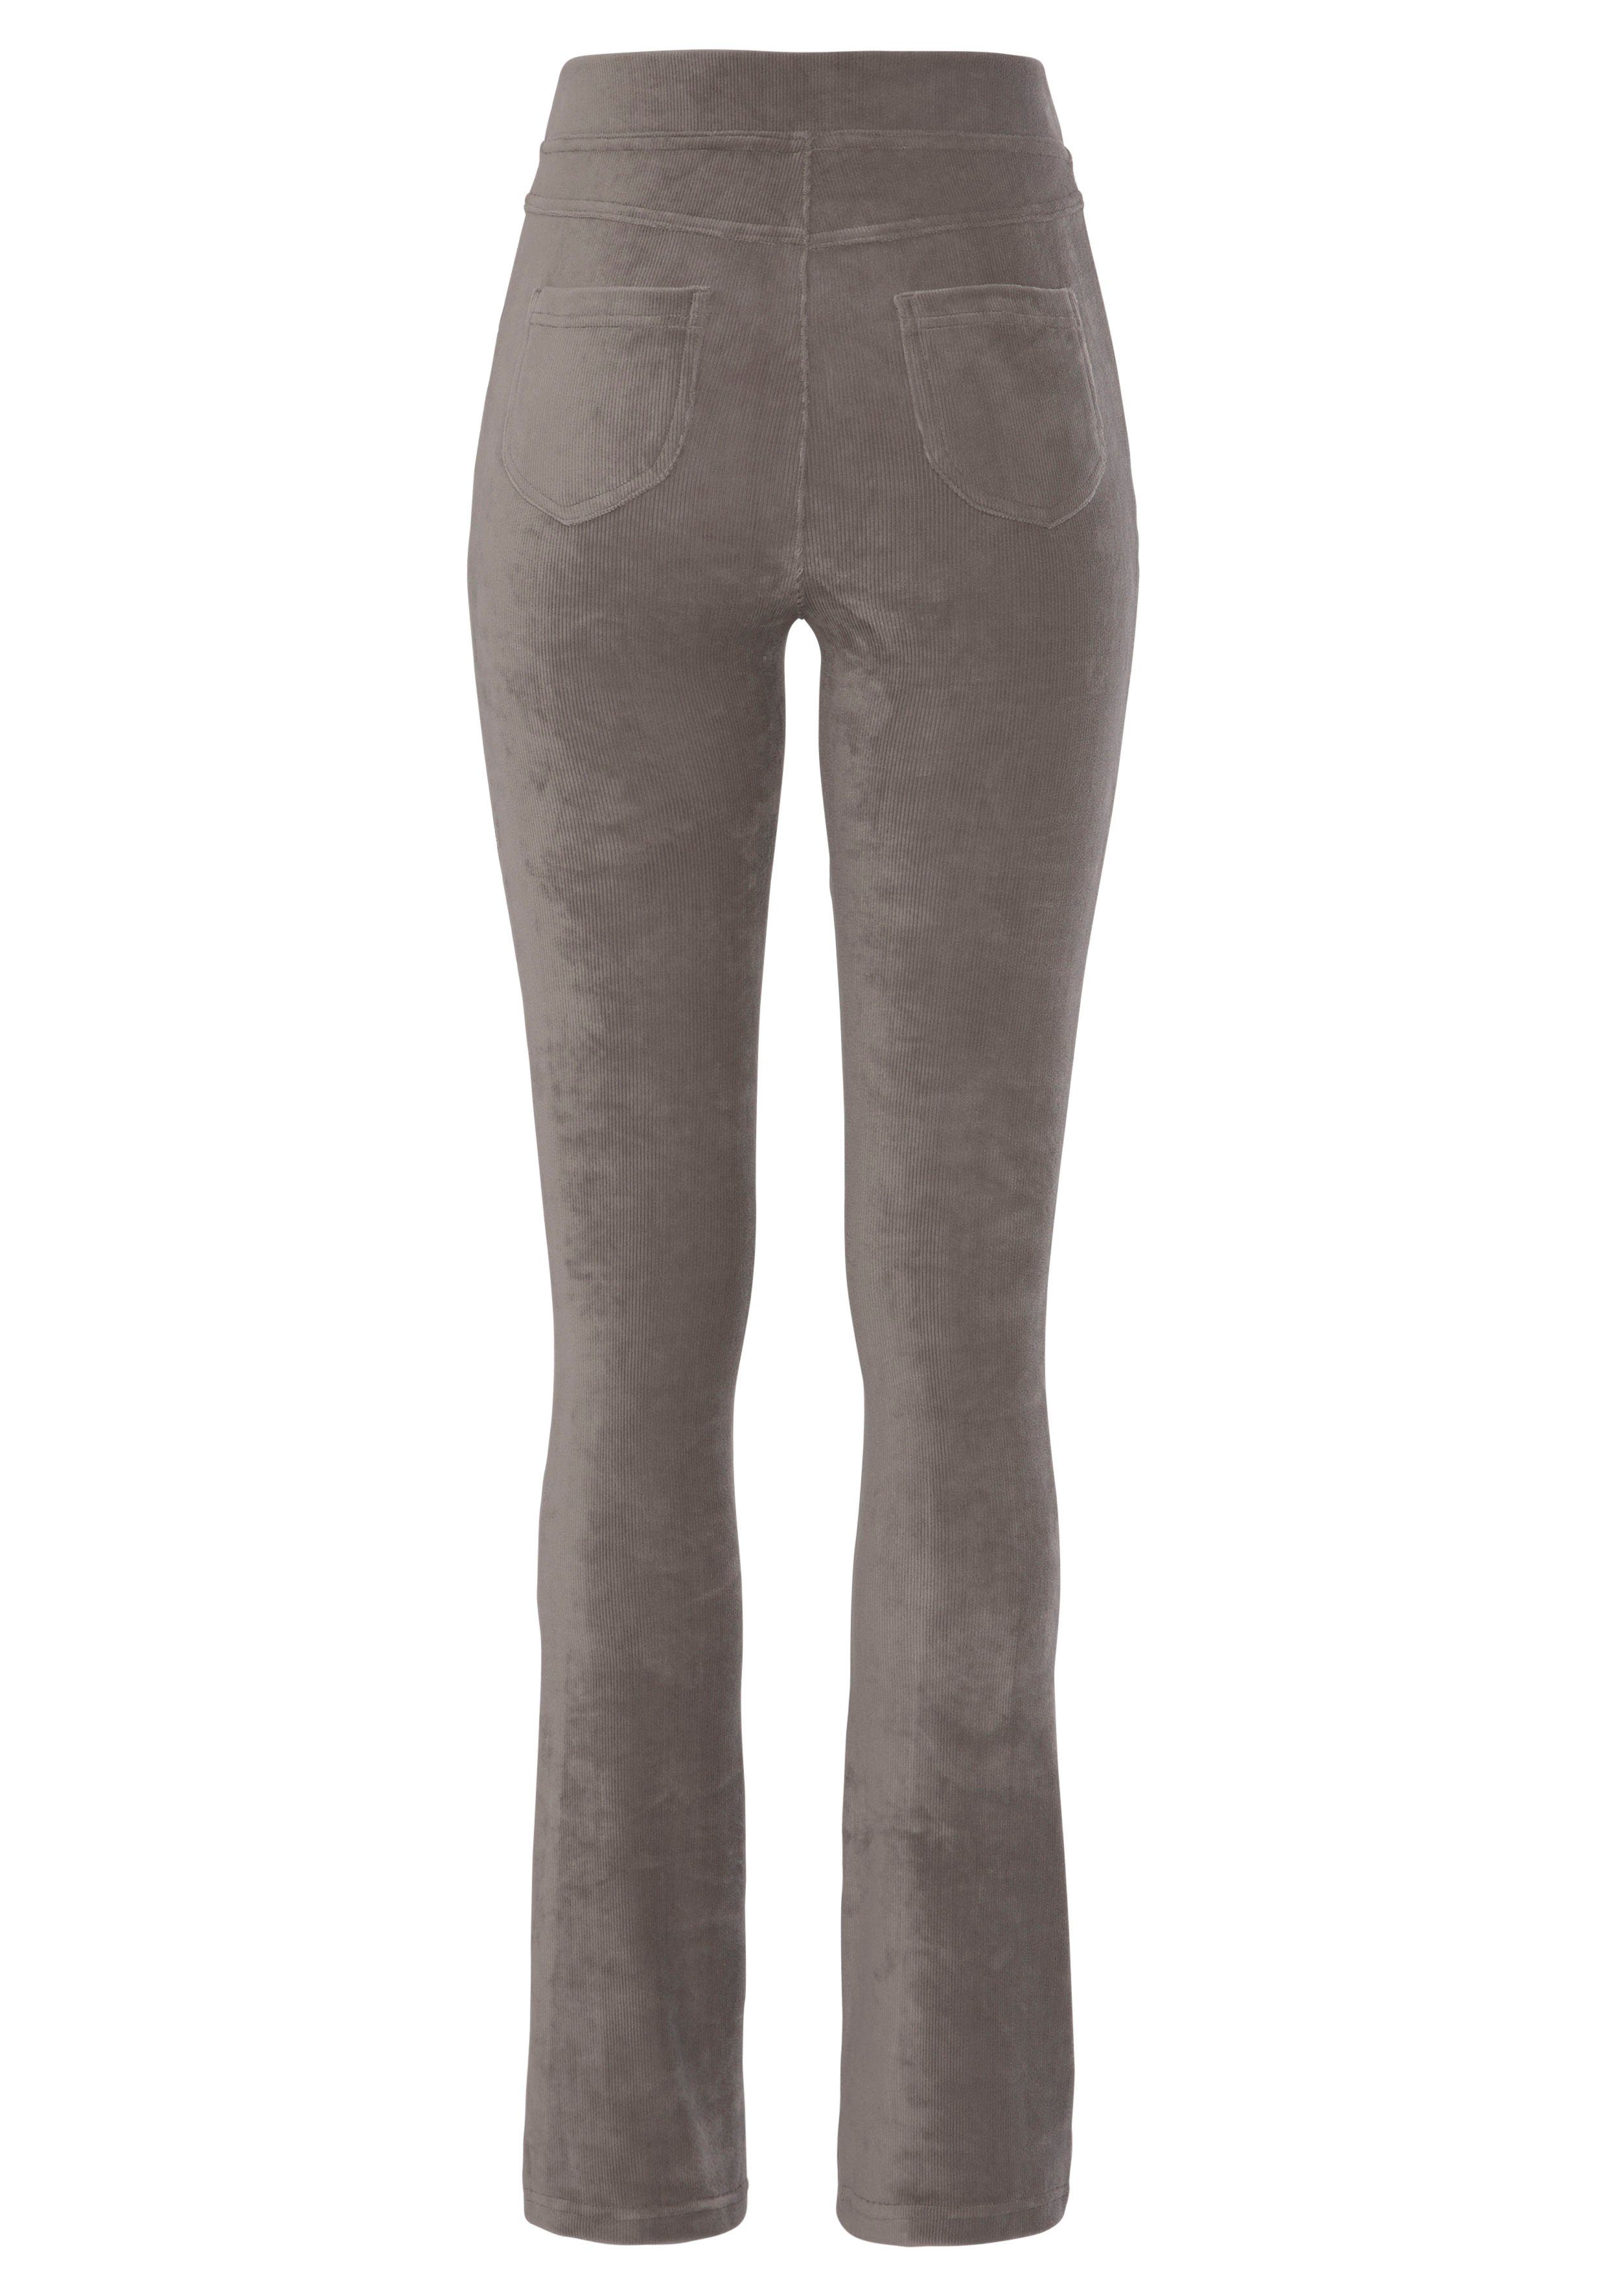 Cord-Optik, LASCANA stone Material Loungewear weichem aus in Jazzpants